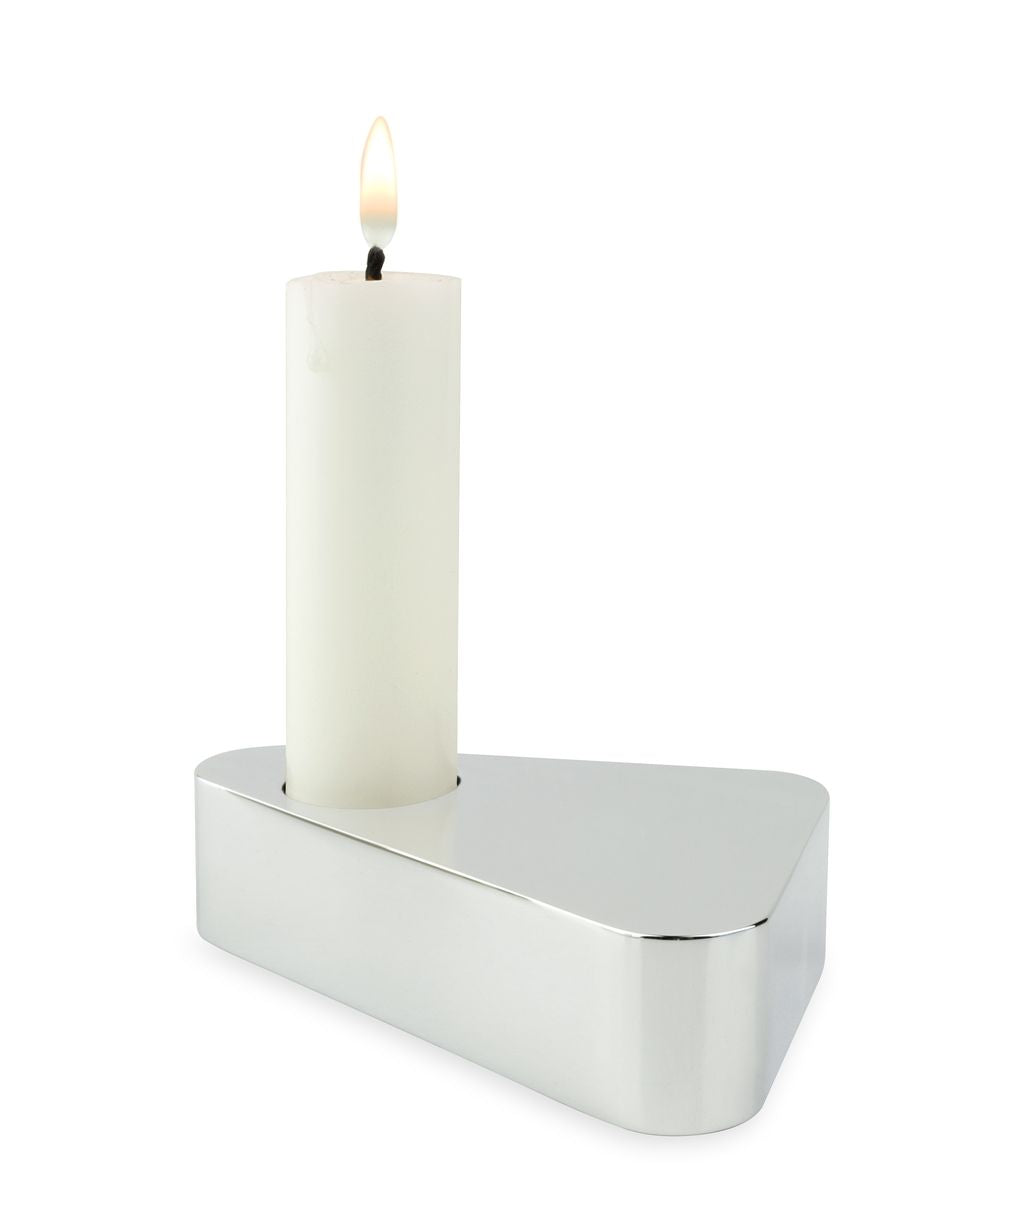 Design novoform Flip Candlestick, argento luccicante